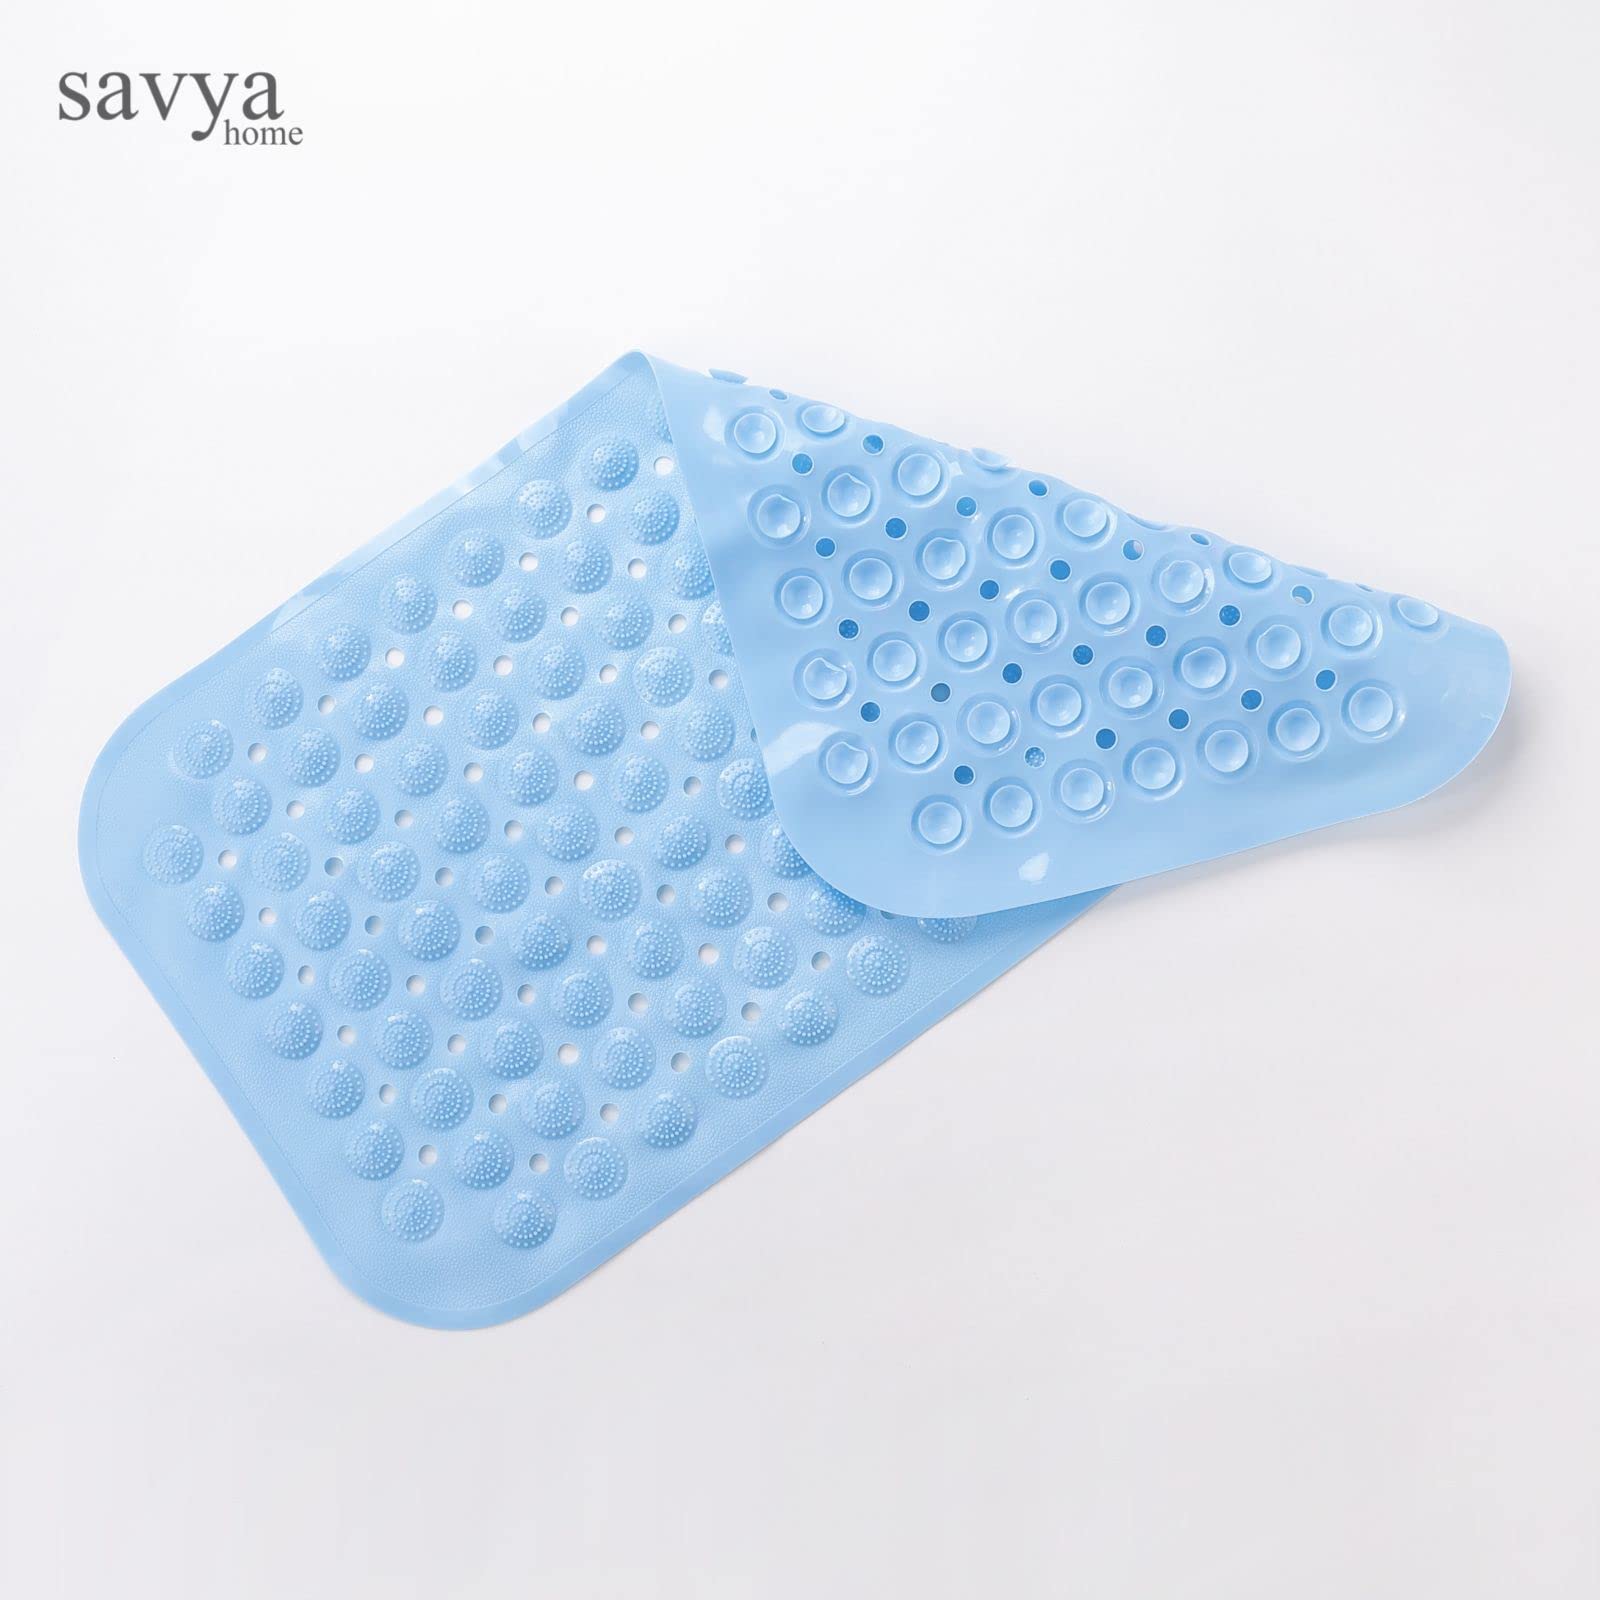 SAVYA HOME Diatom Mud Bathroom Floor Mat |71 x 35.5|40 x 100|PVC Accu-Pebble Soft & Light Weight Anti-Skid Mat for Living Room,Bathroom/Shower Mat/Multipurpose(Sky Blue) (71 x 35.5, Sky Blue)